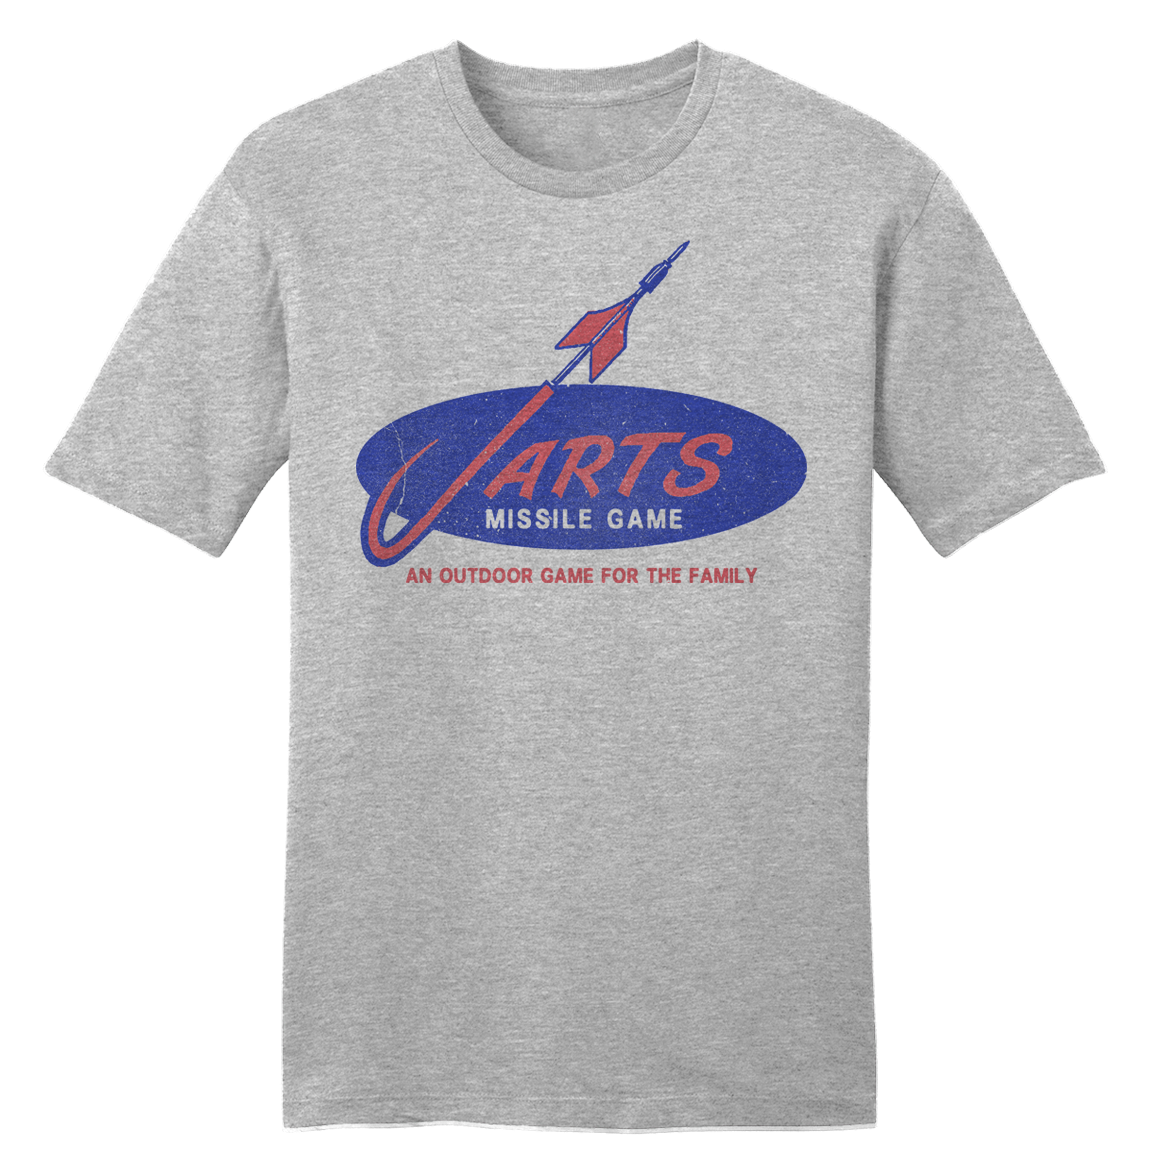 Jarts T-shirt